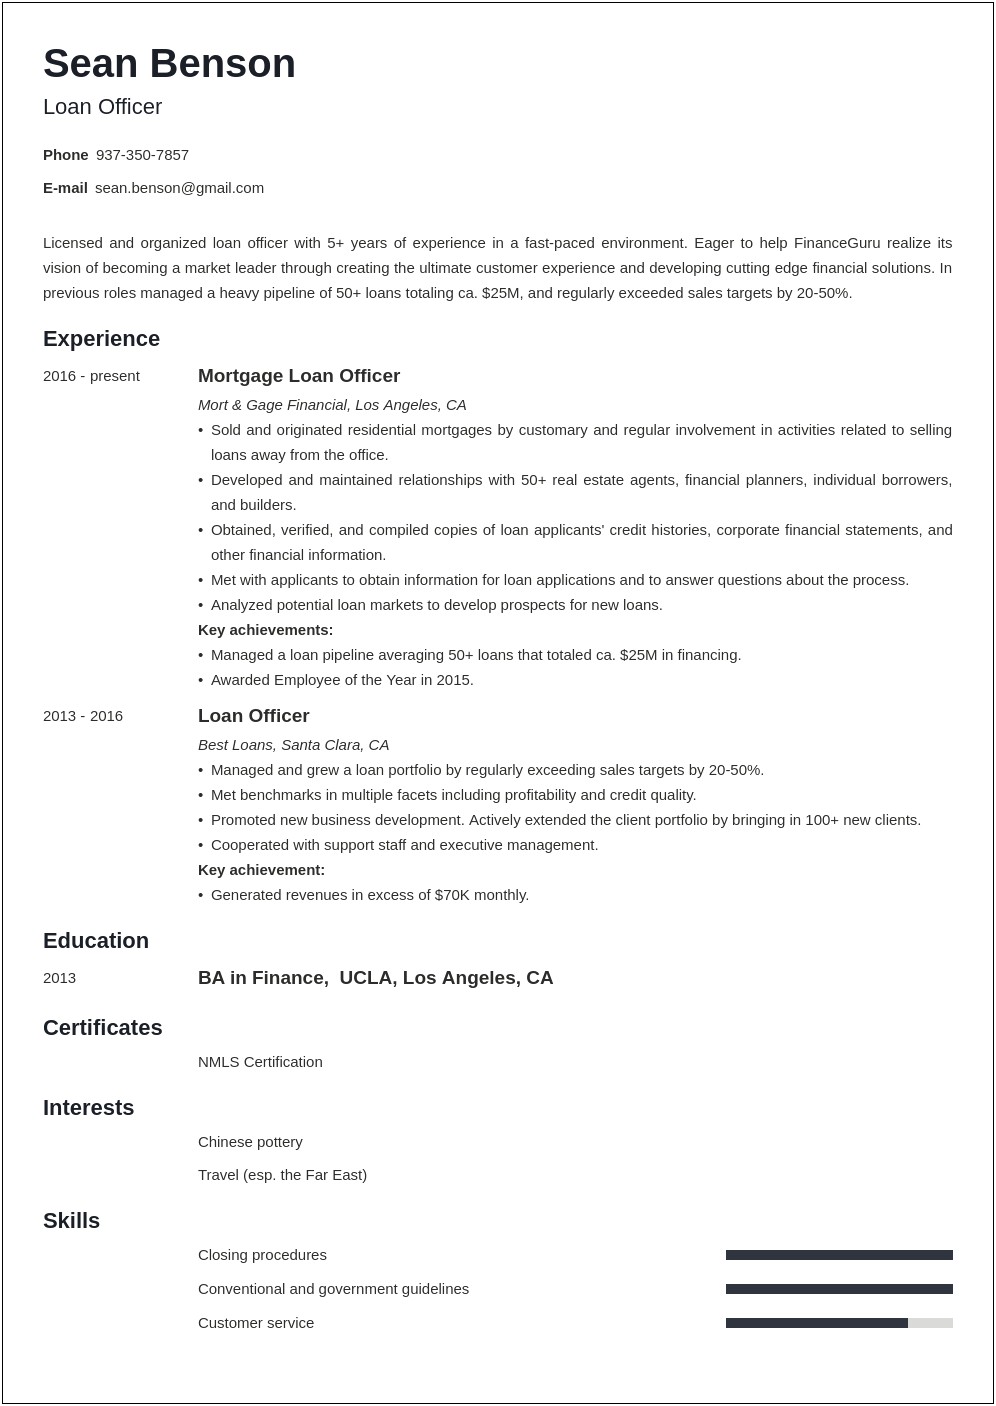 Sample Resume For Senior Mortgage Originator